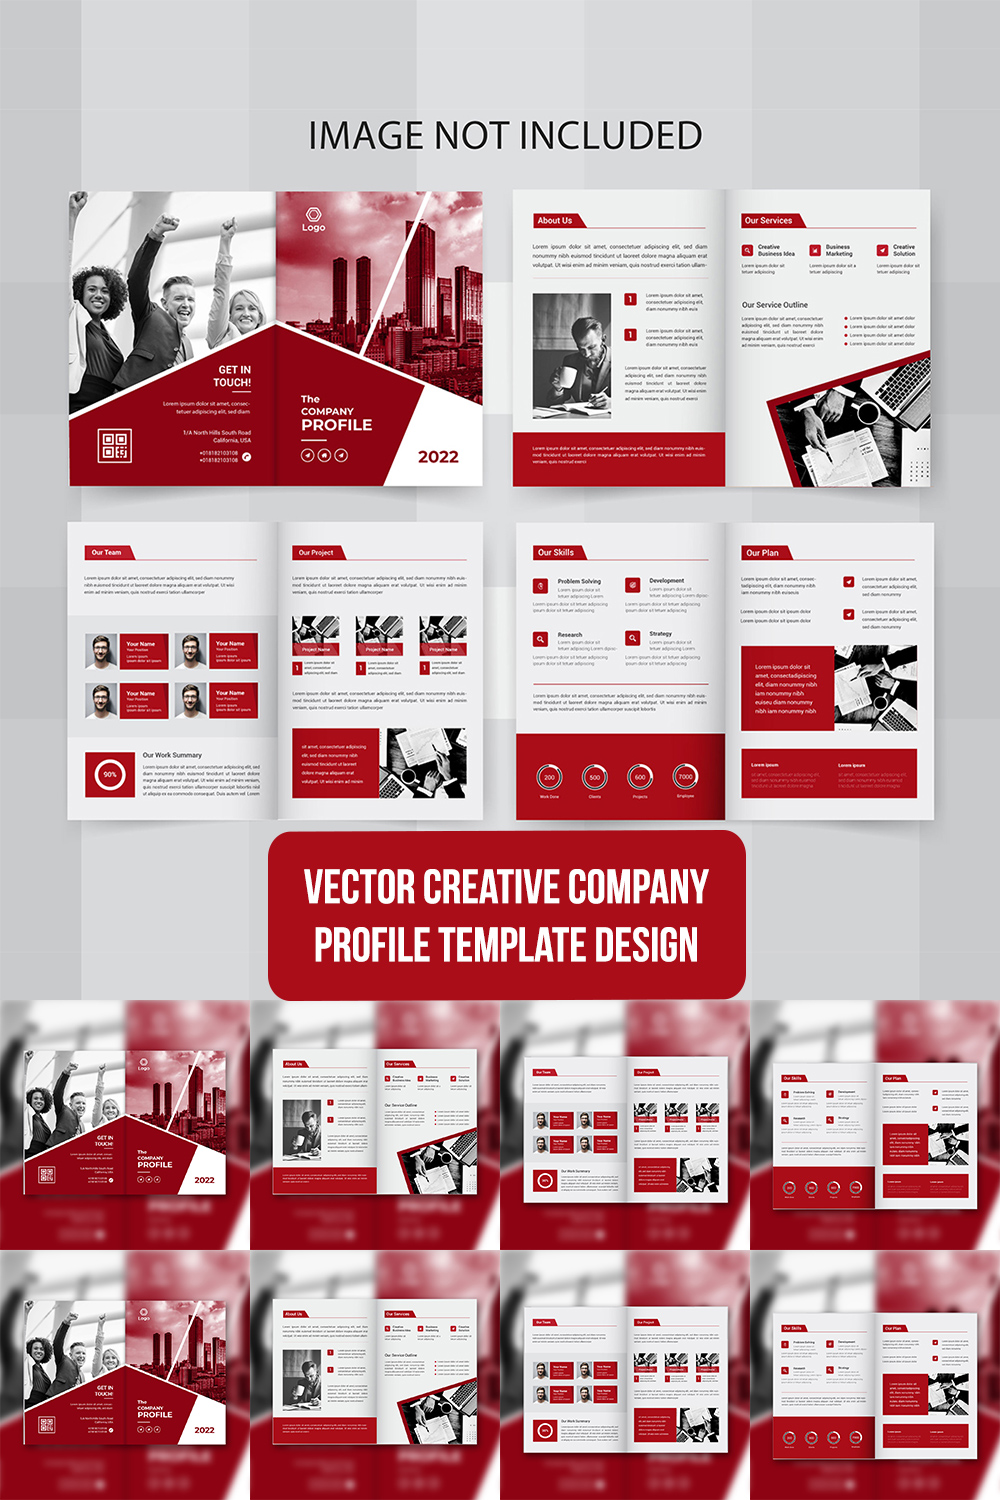 Vector Creative Company Profile Template Design pinterest preview image.